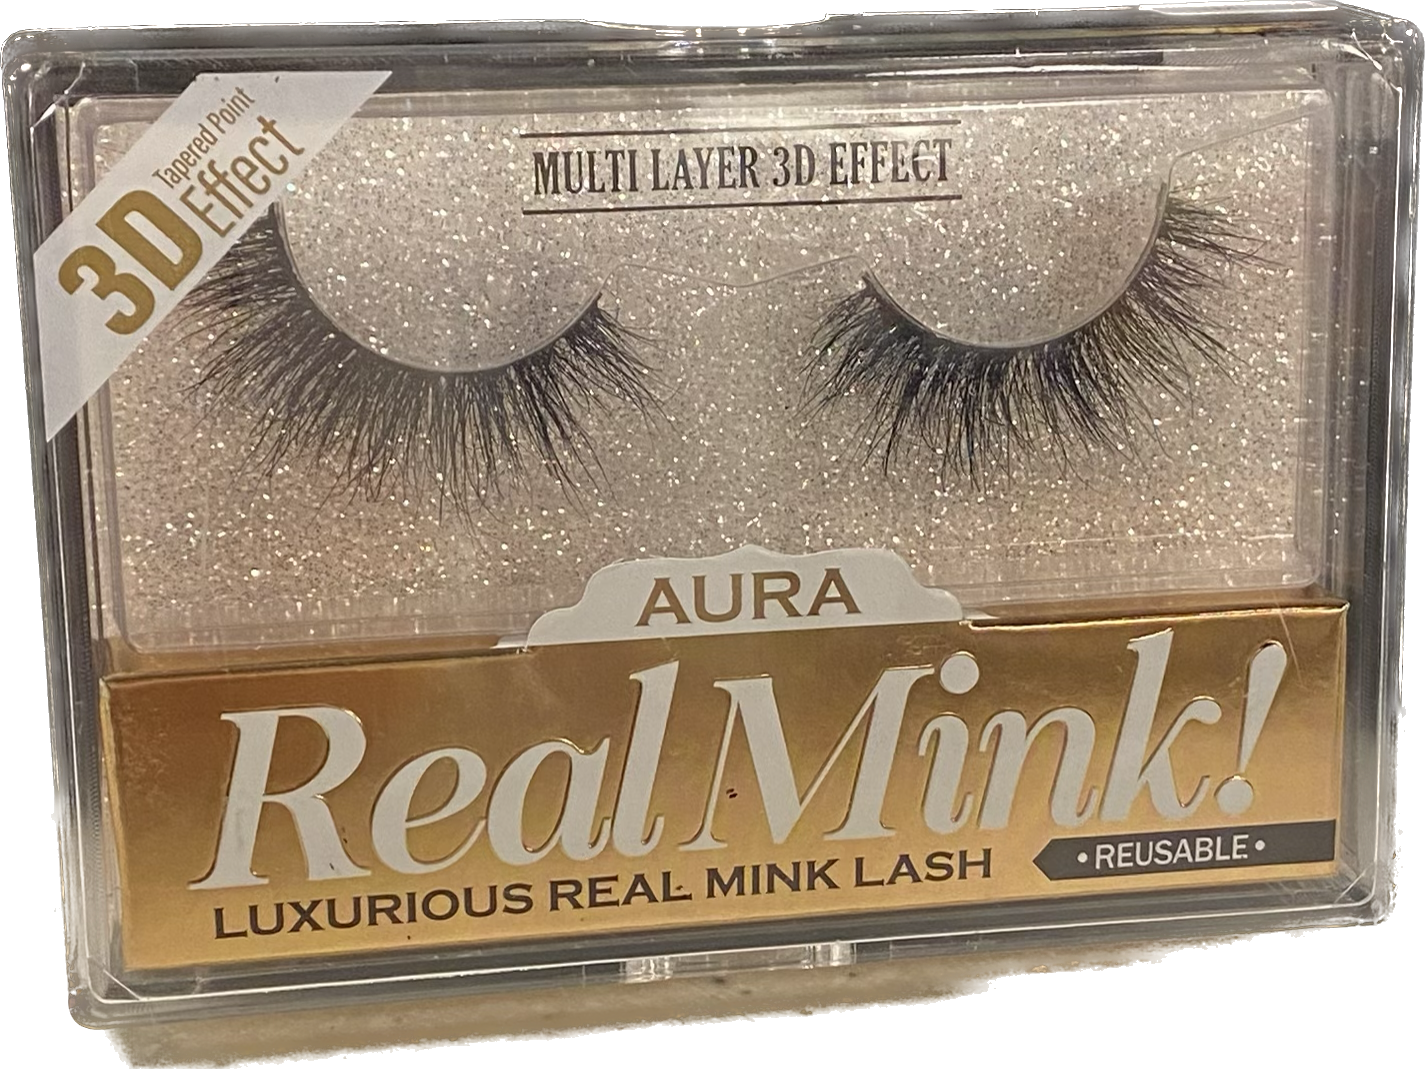 Aura 3D Real Mink Lashes